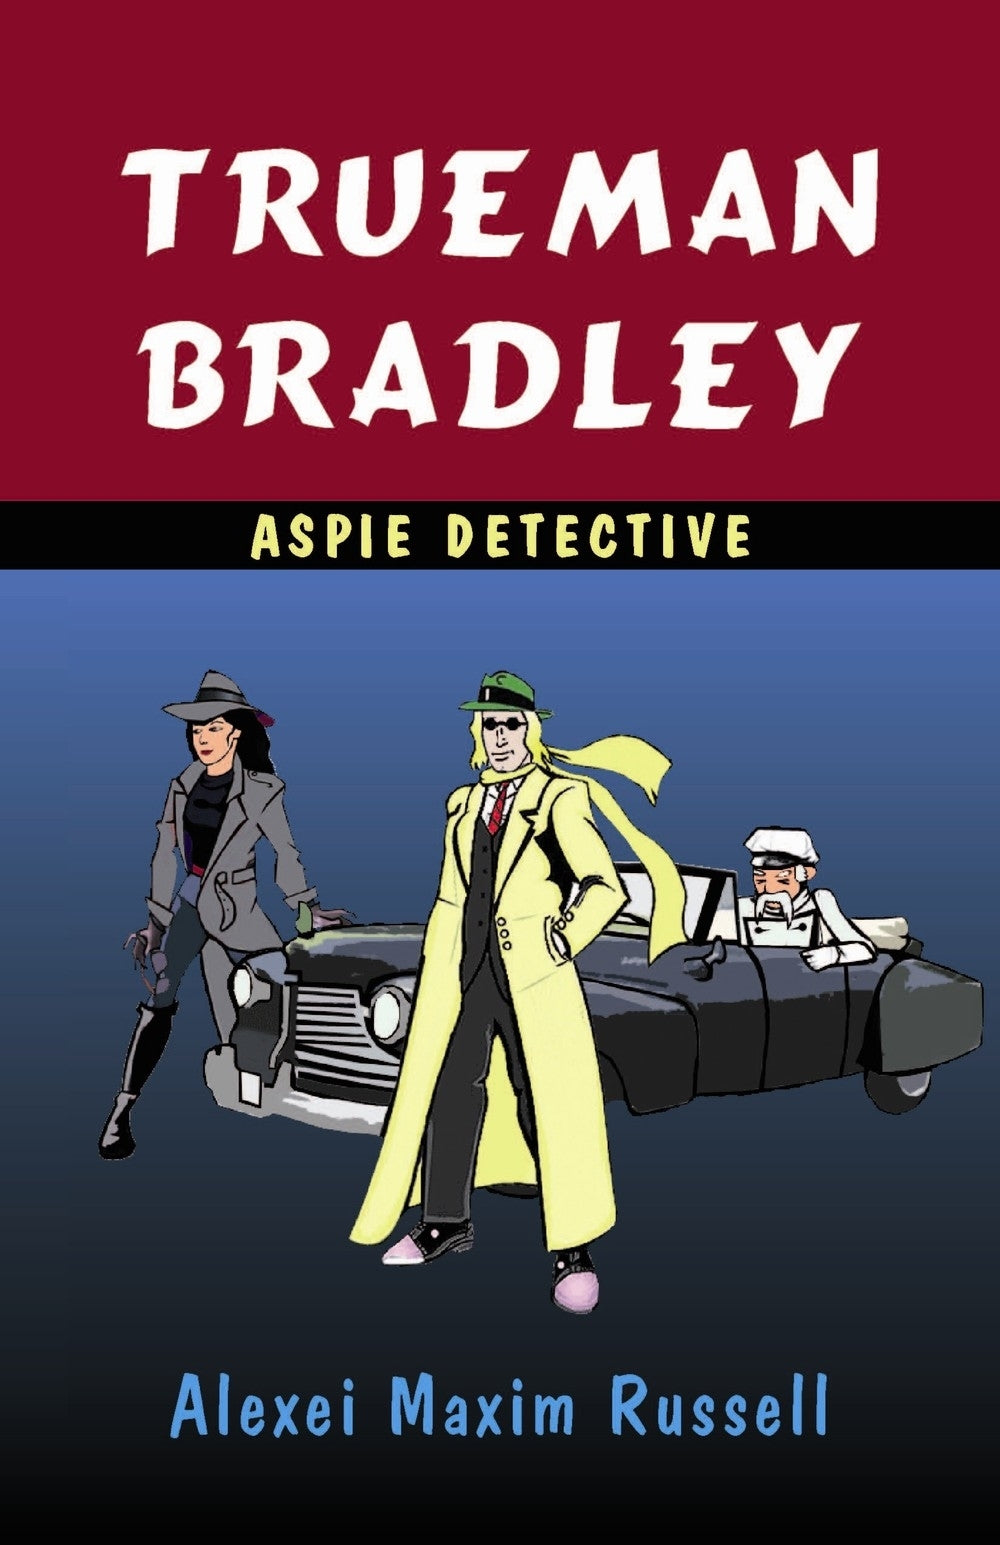 Trueman Bradley - Aspie Detective by Alexei Maxim Russell